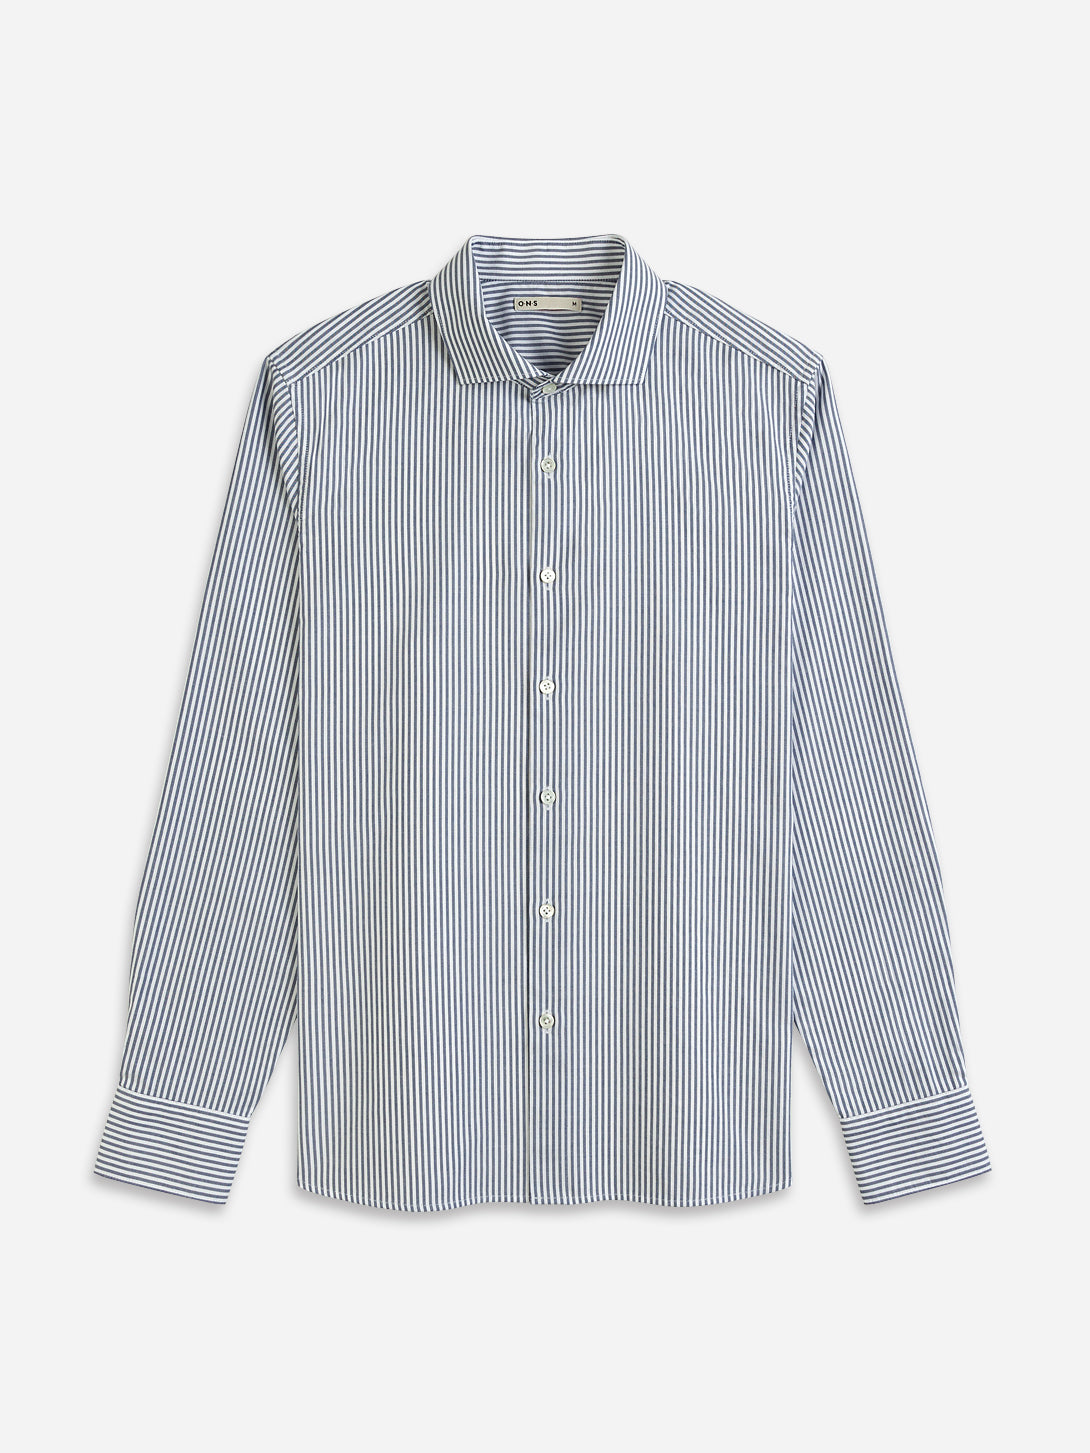 Navy/White Stripe Men's Arthur Stripe Oxford Button Up Shirt